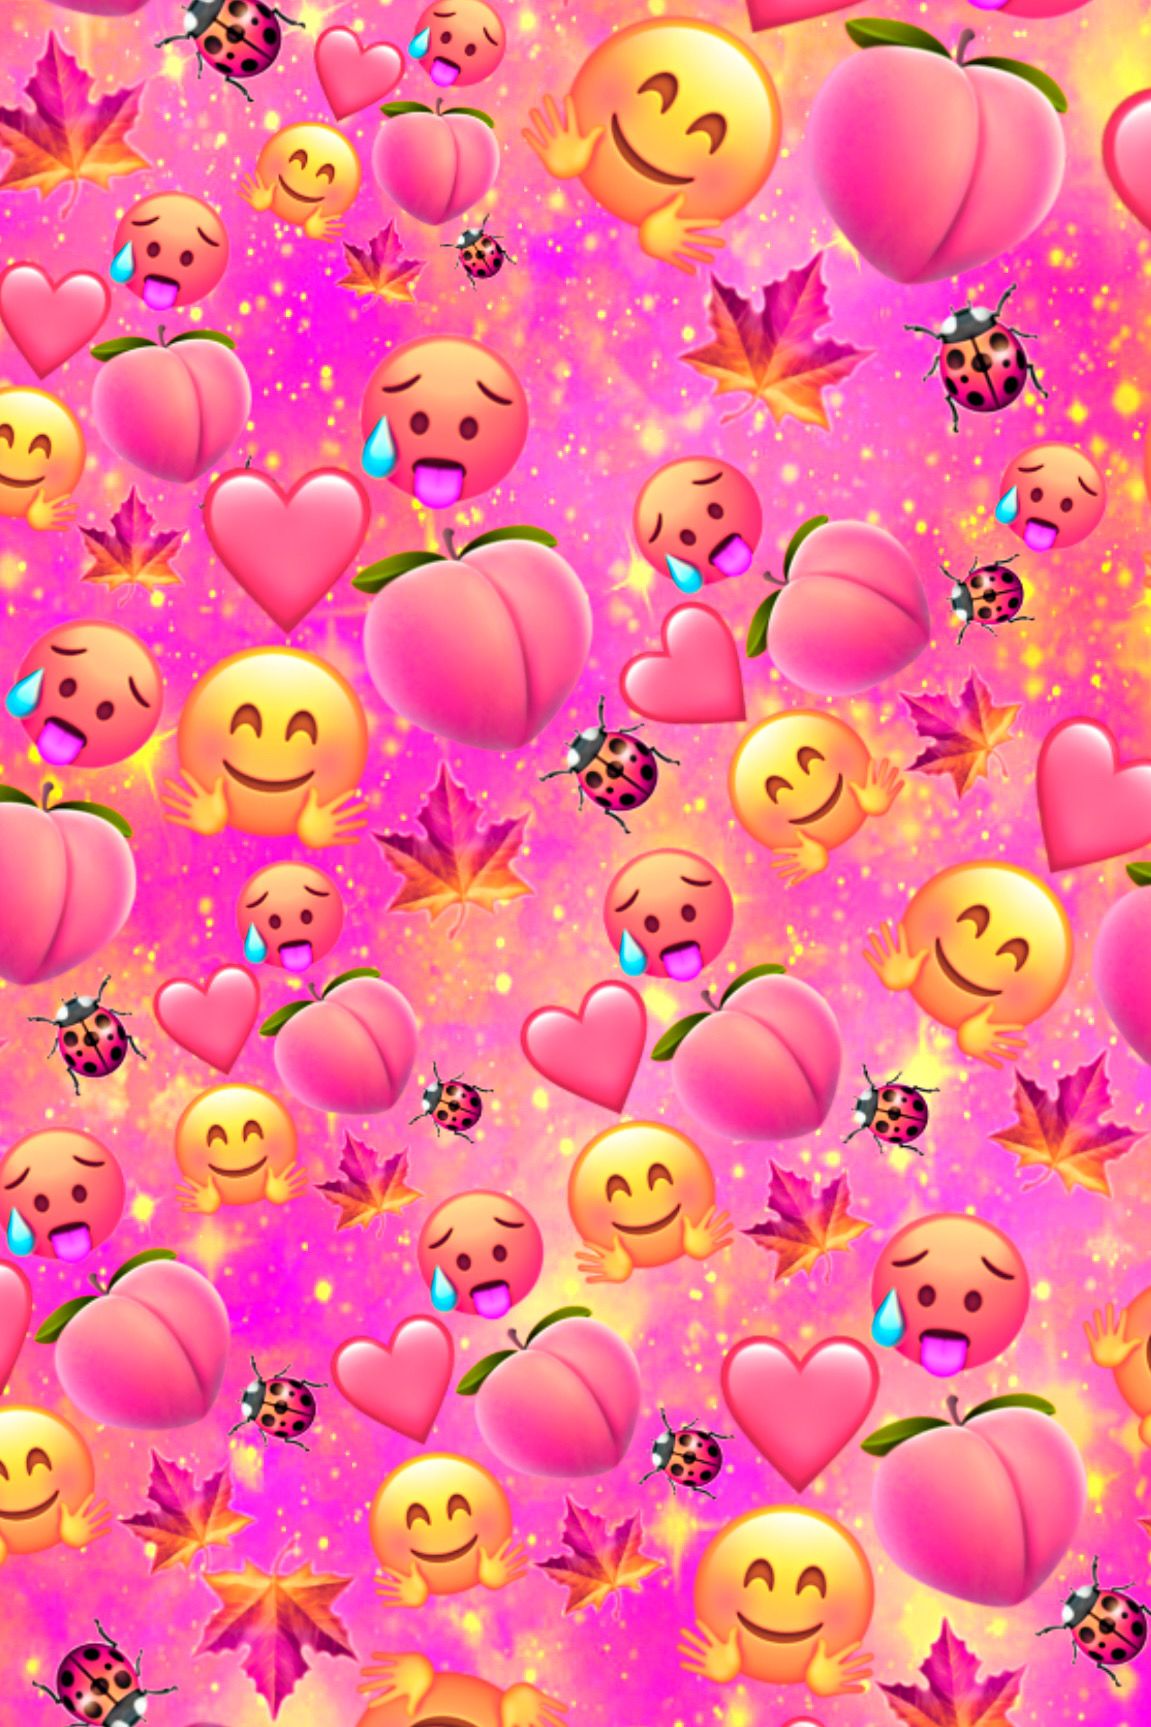 Free download Purple Emoji background Emoji wallpaper iphone Emoji